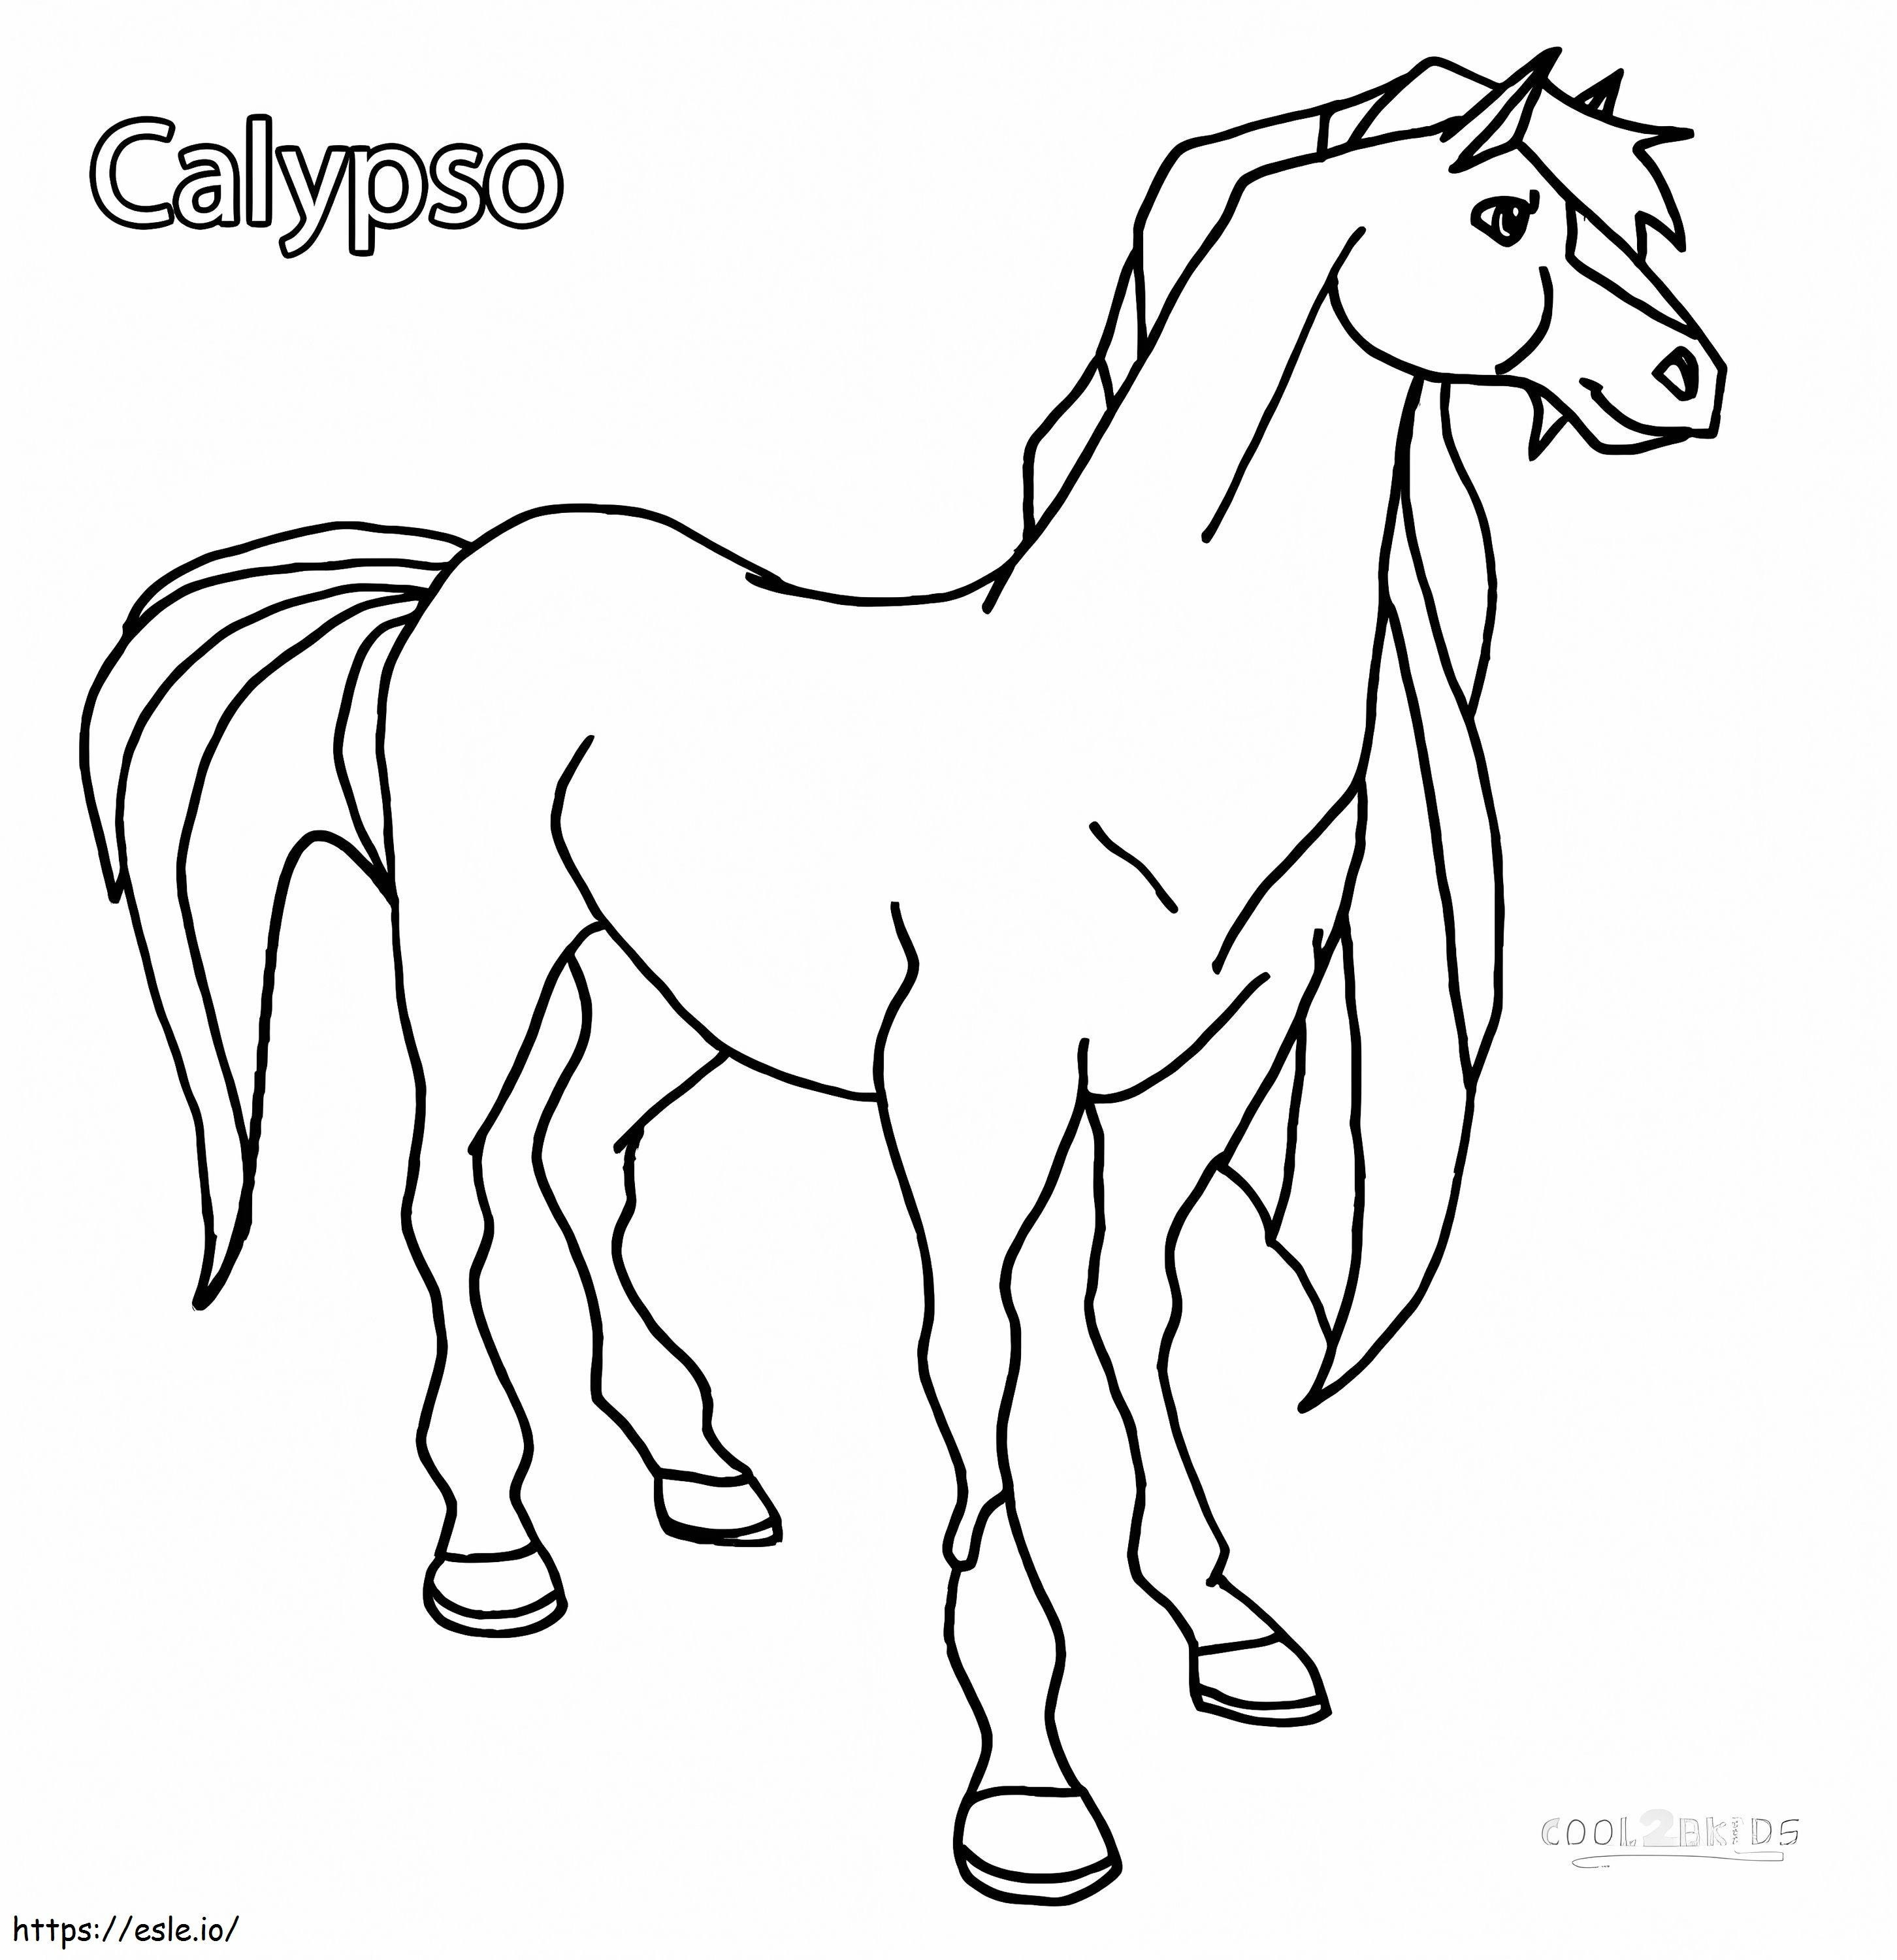 Horseland'dan Calypso boyama